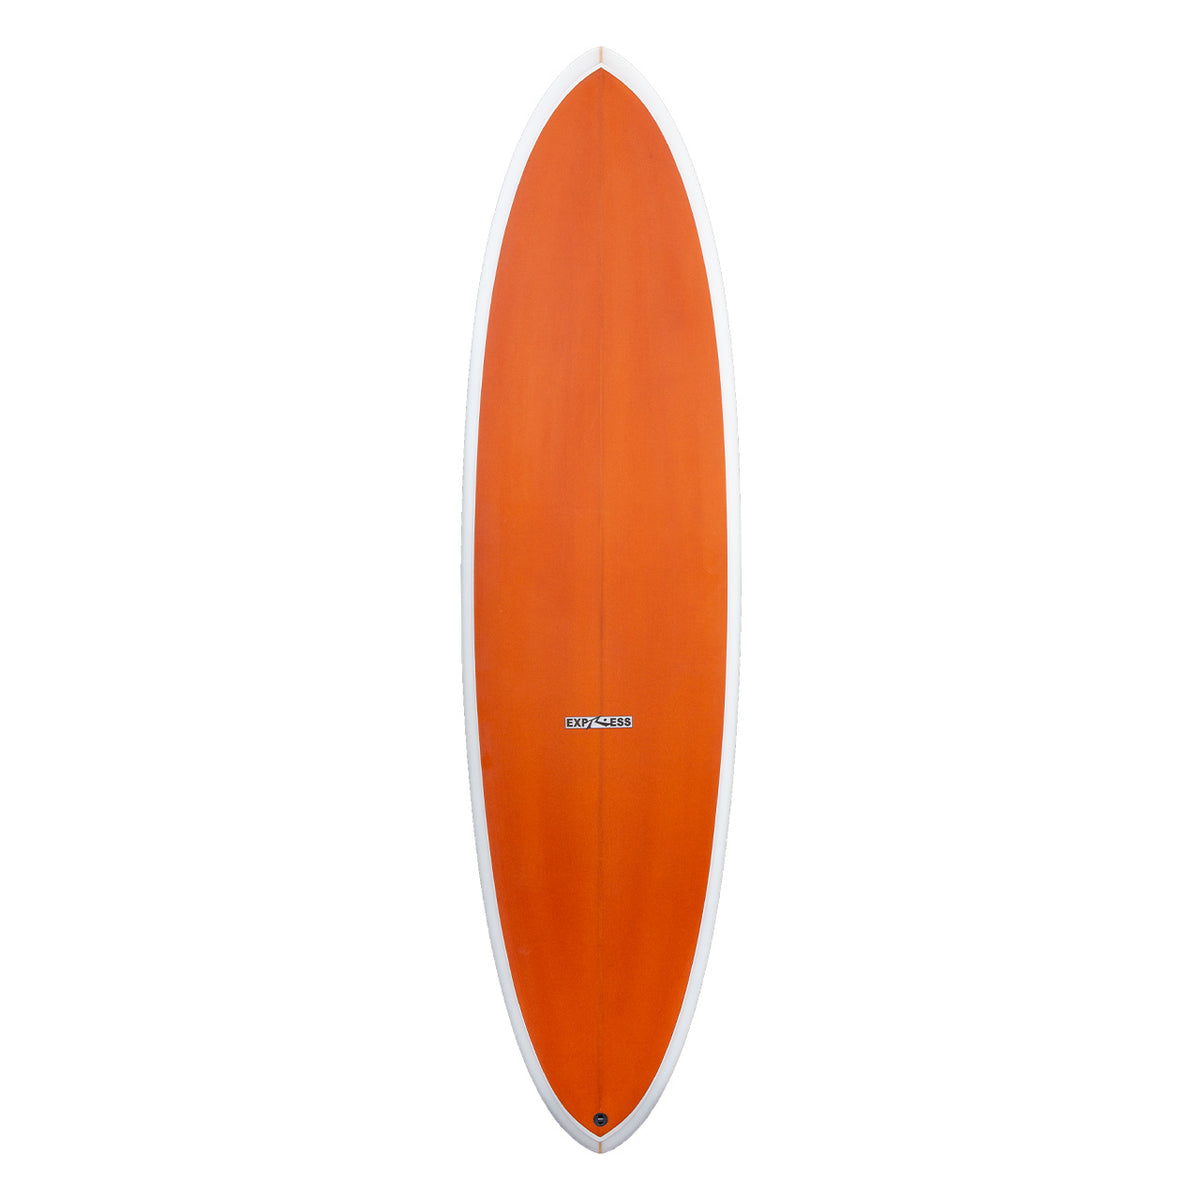 Express Midlength Surfboard - Root Beer - Deck - Rusty Surfboards 